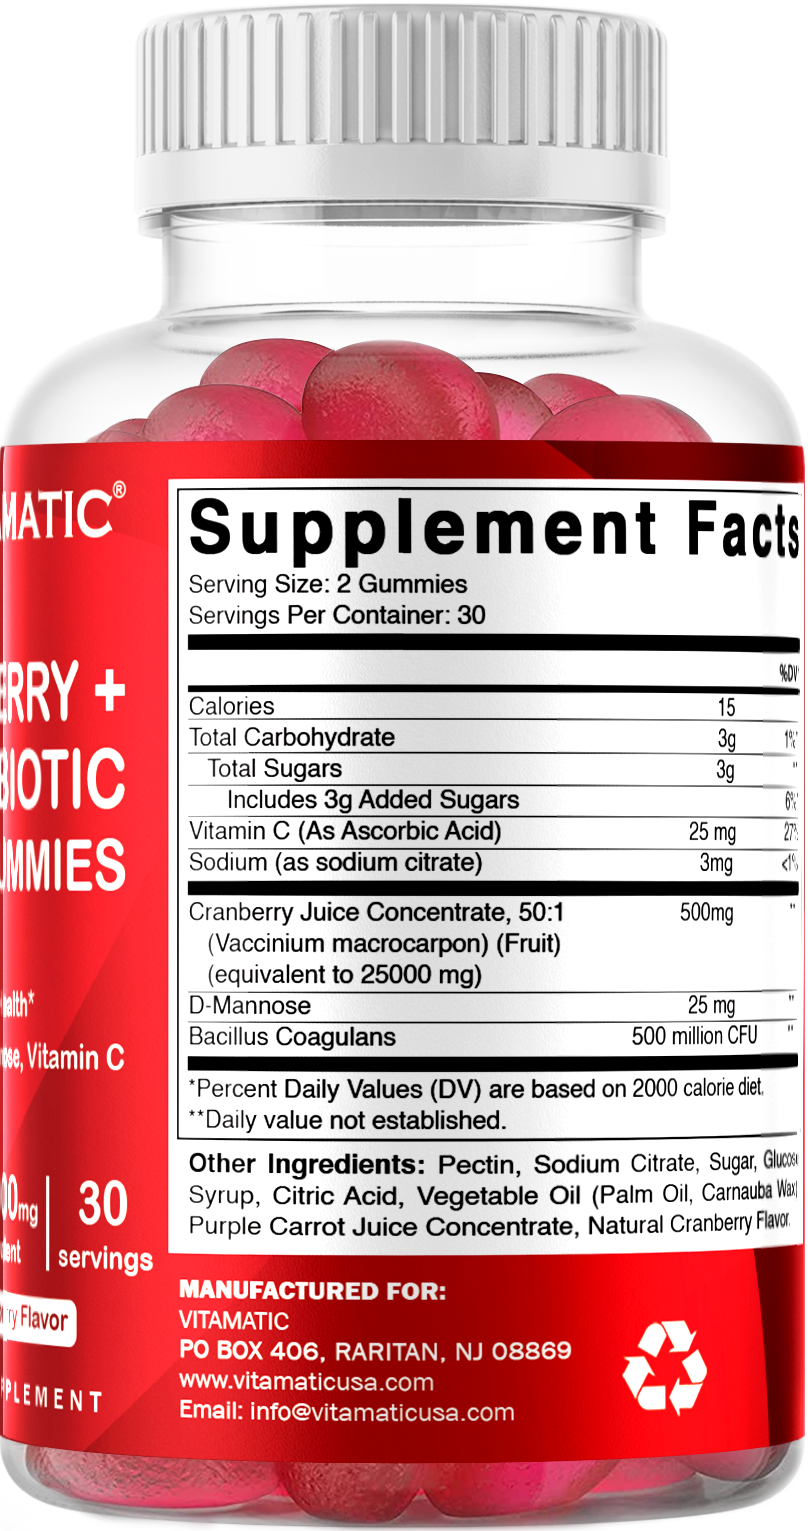 Cranberry with Probiotics 25000mg 60 Vegan Gummies